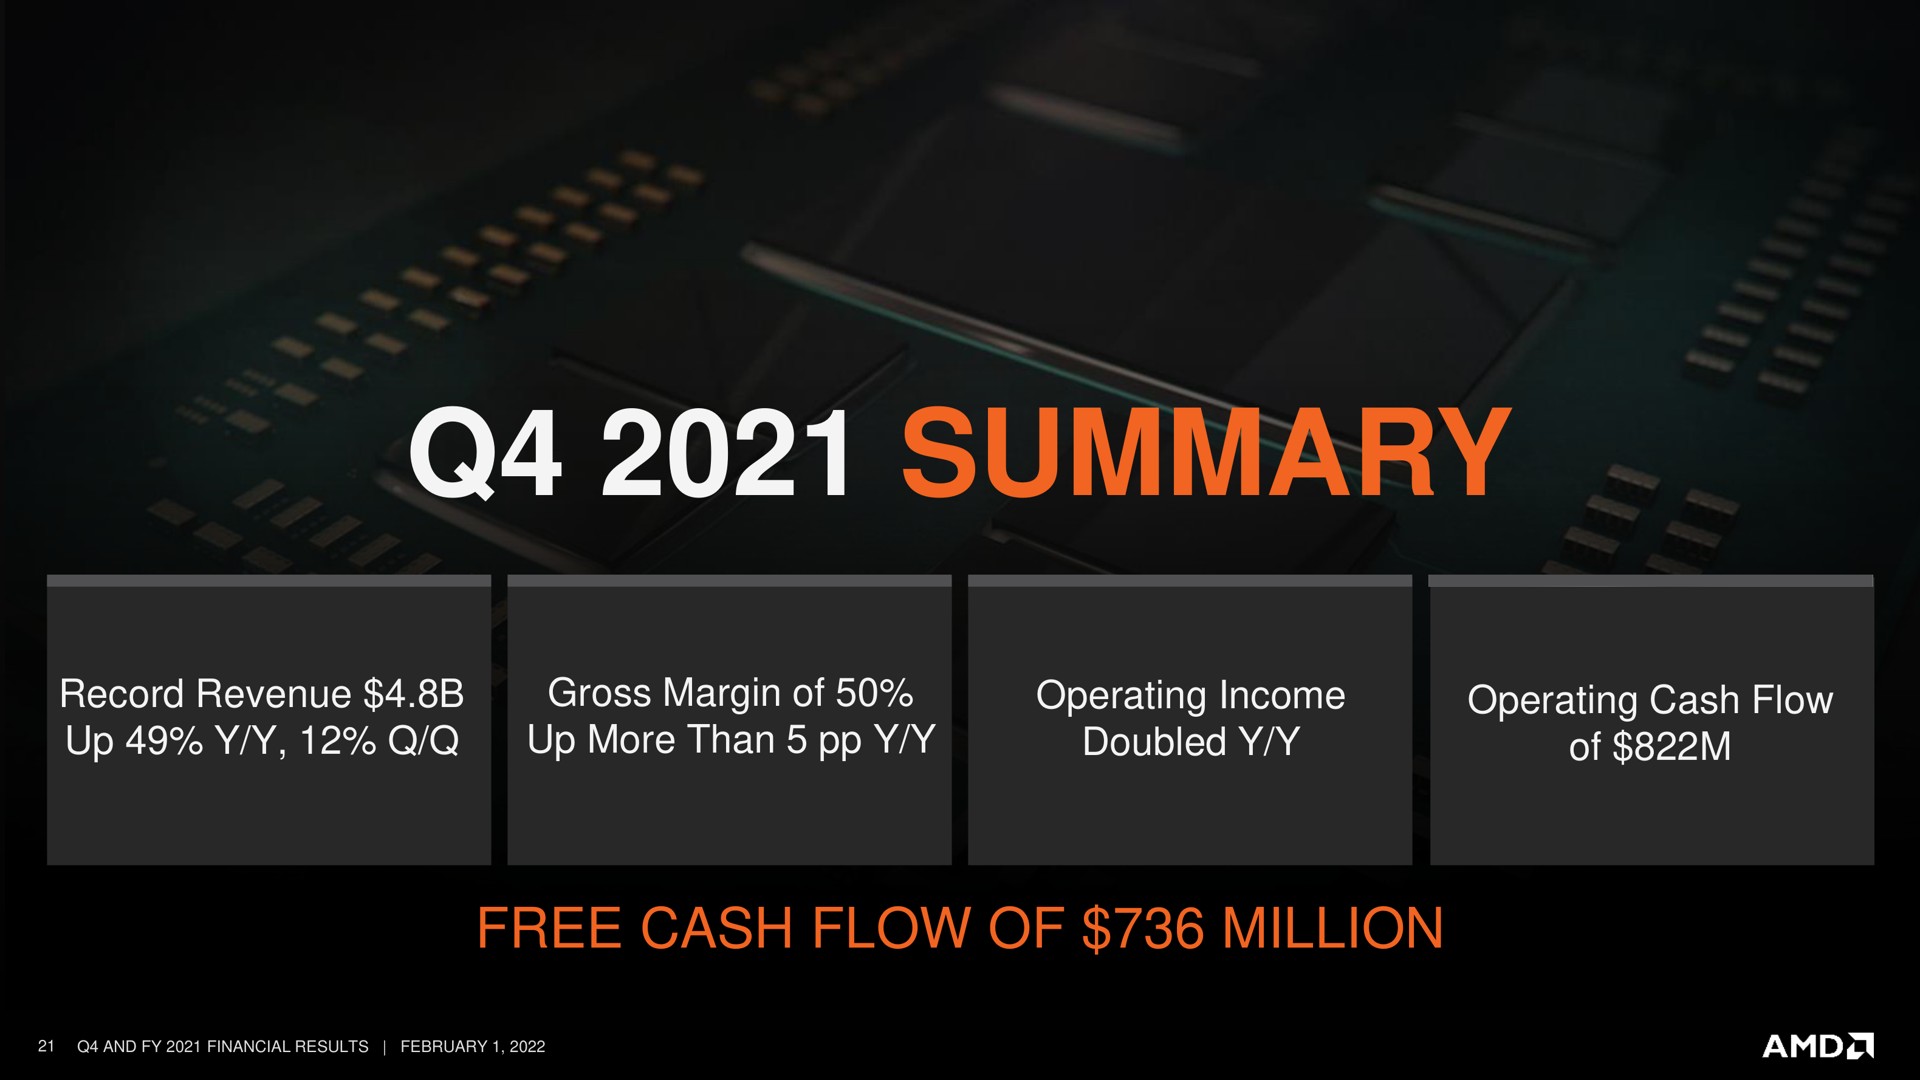 summary free cash flow of million | AMD